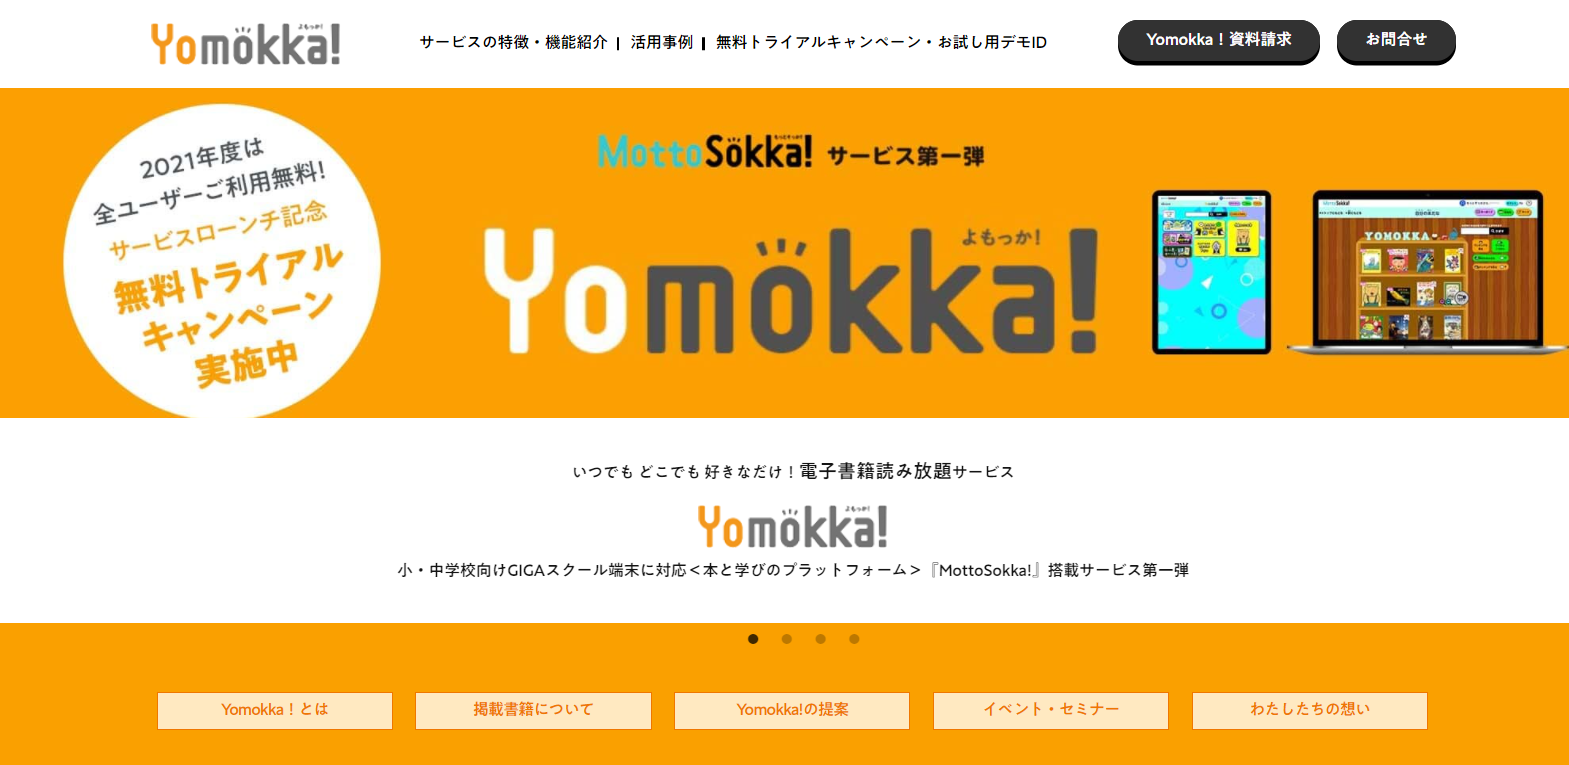 『Yomokka!』サービスサイトTOP